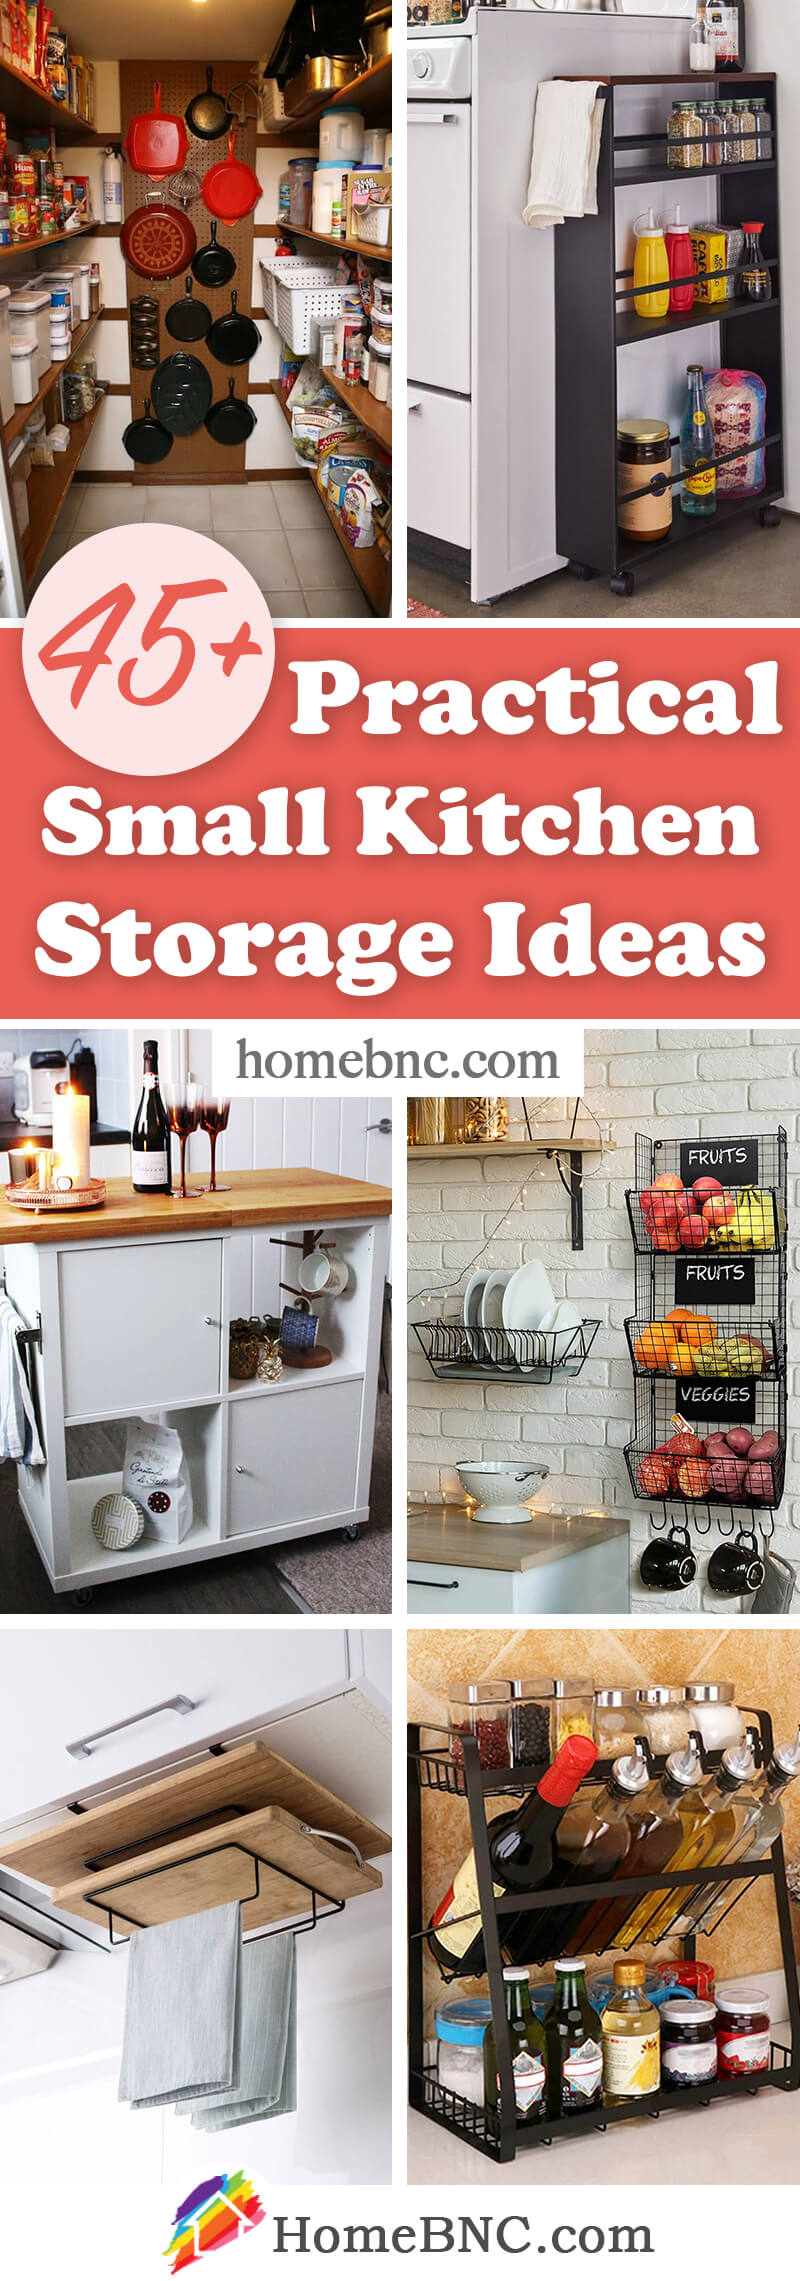 25+ Best Small Kitchen Storage Organization Ideas and Designs for 25